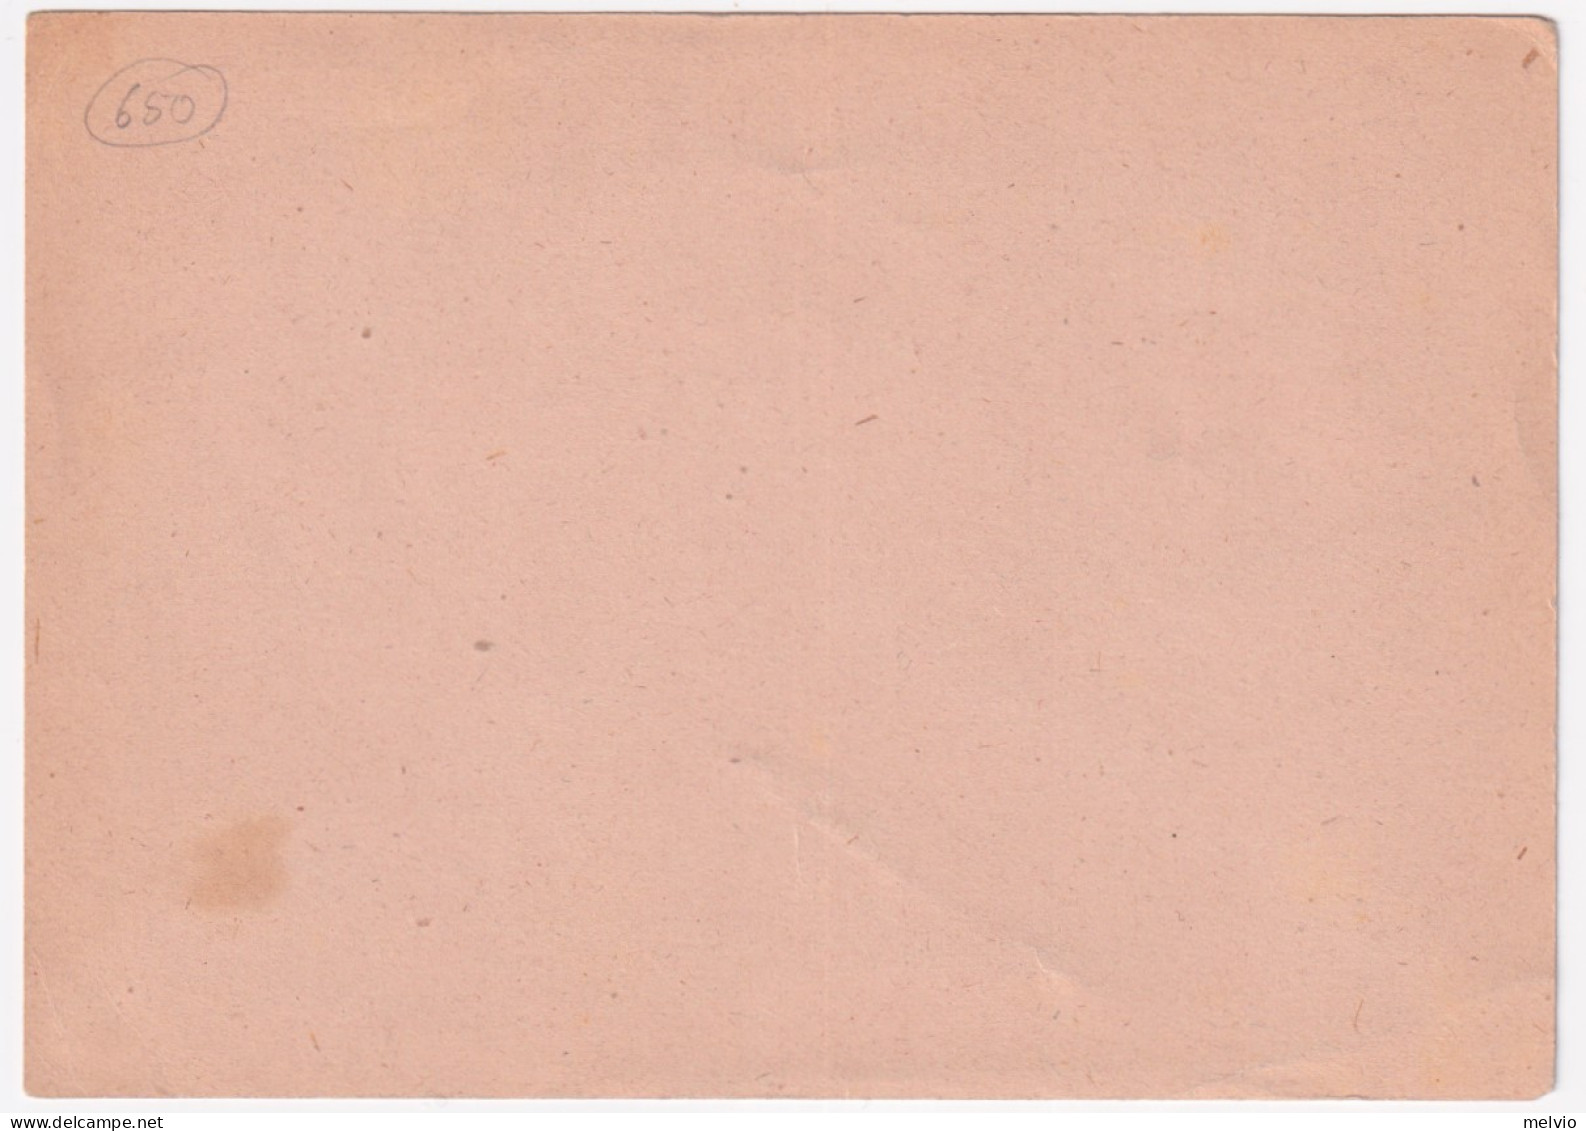 1946-Cartolina Postale Lire 3 Fiaccola (C131) Nuova - Entero Postal